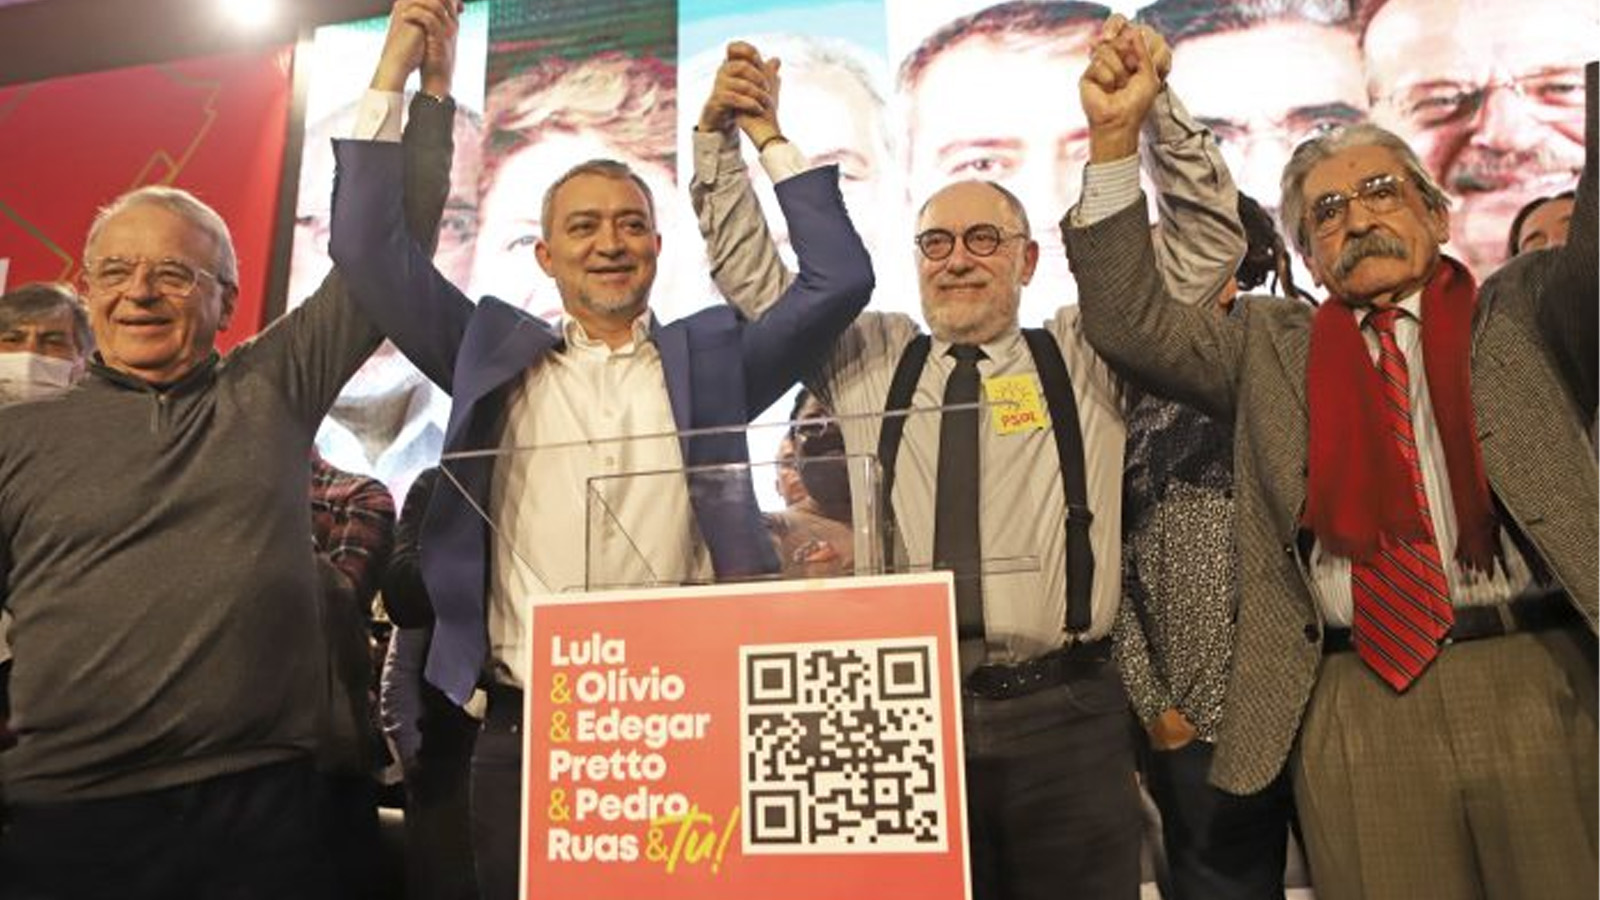 PT oficializa Edegar Pretto como candidato ao governo do Estado